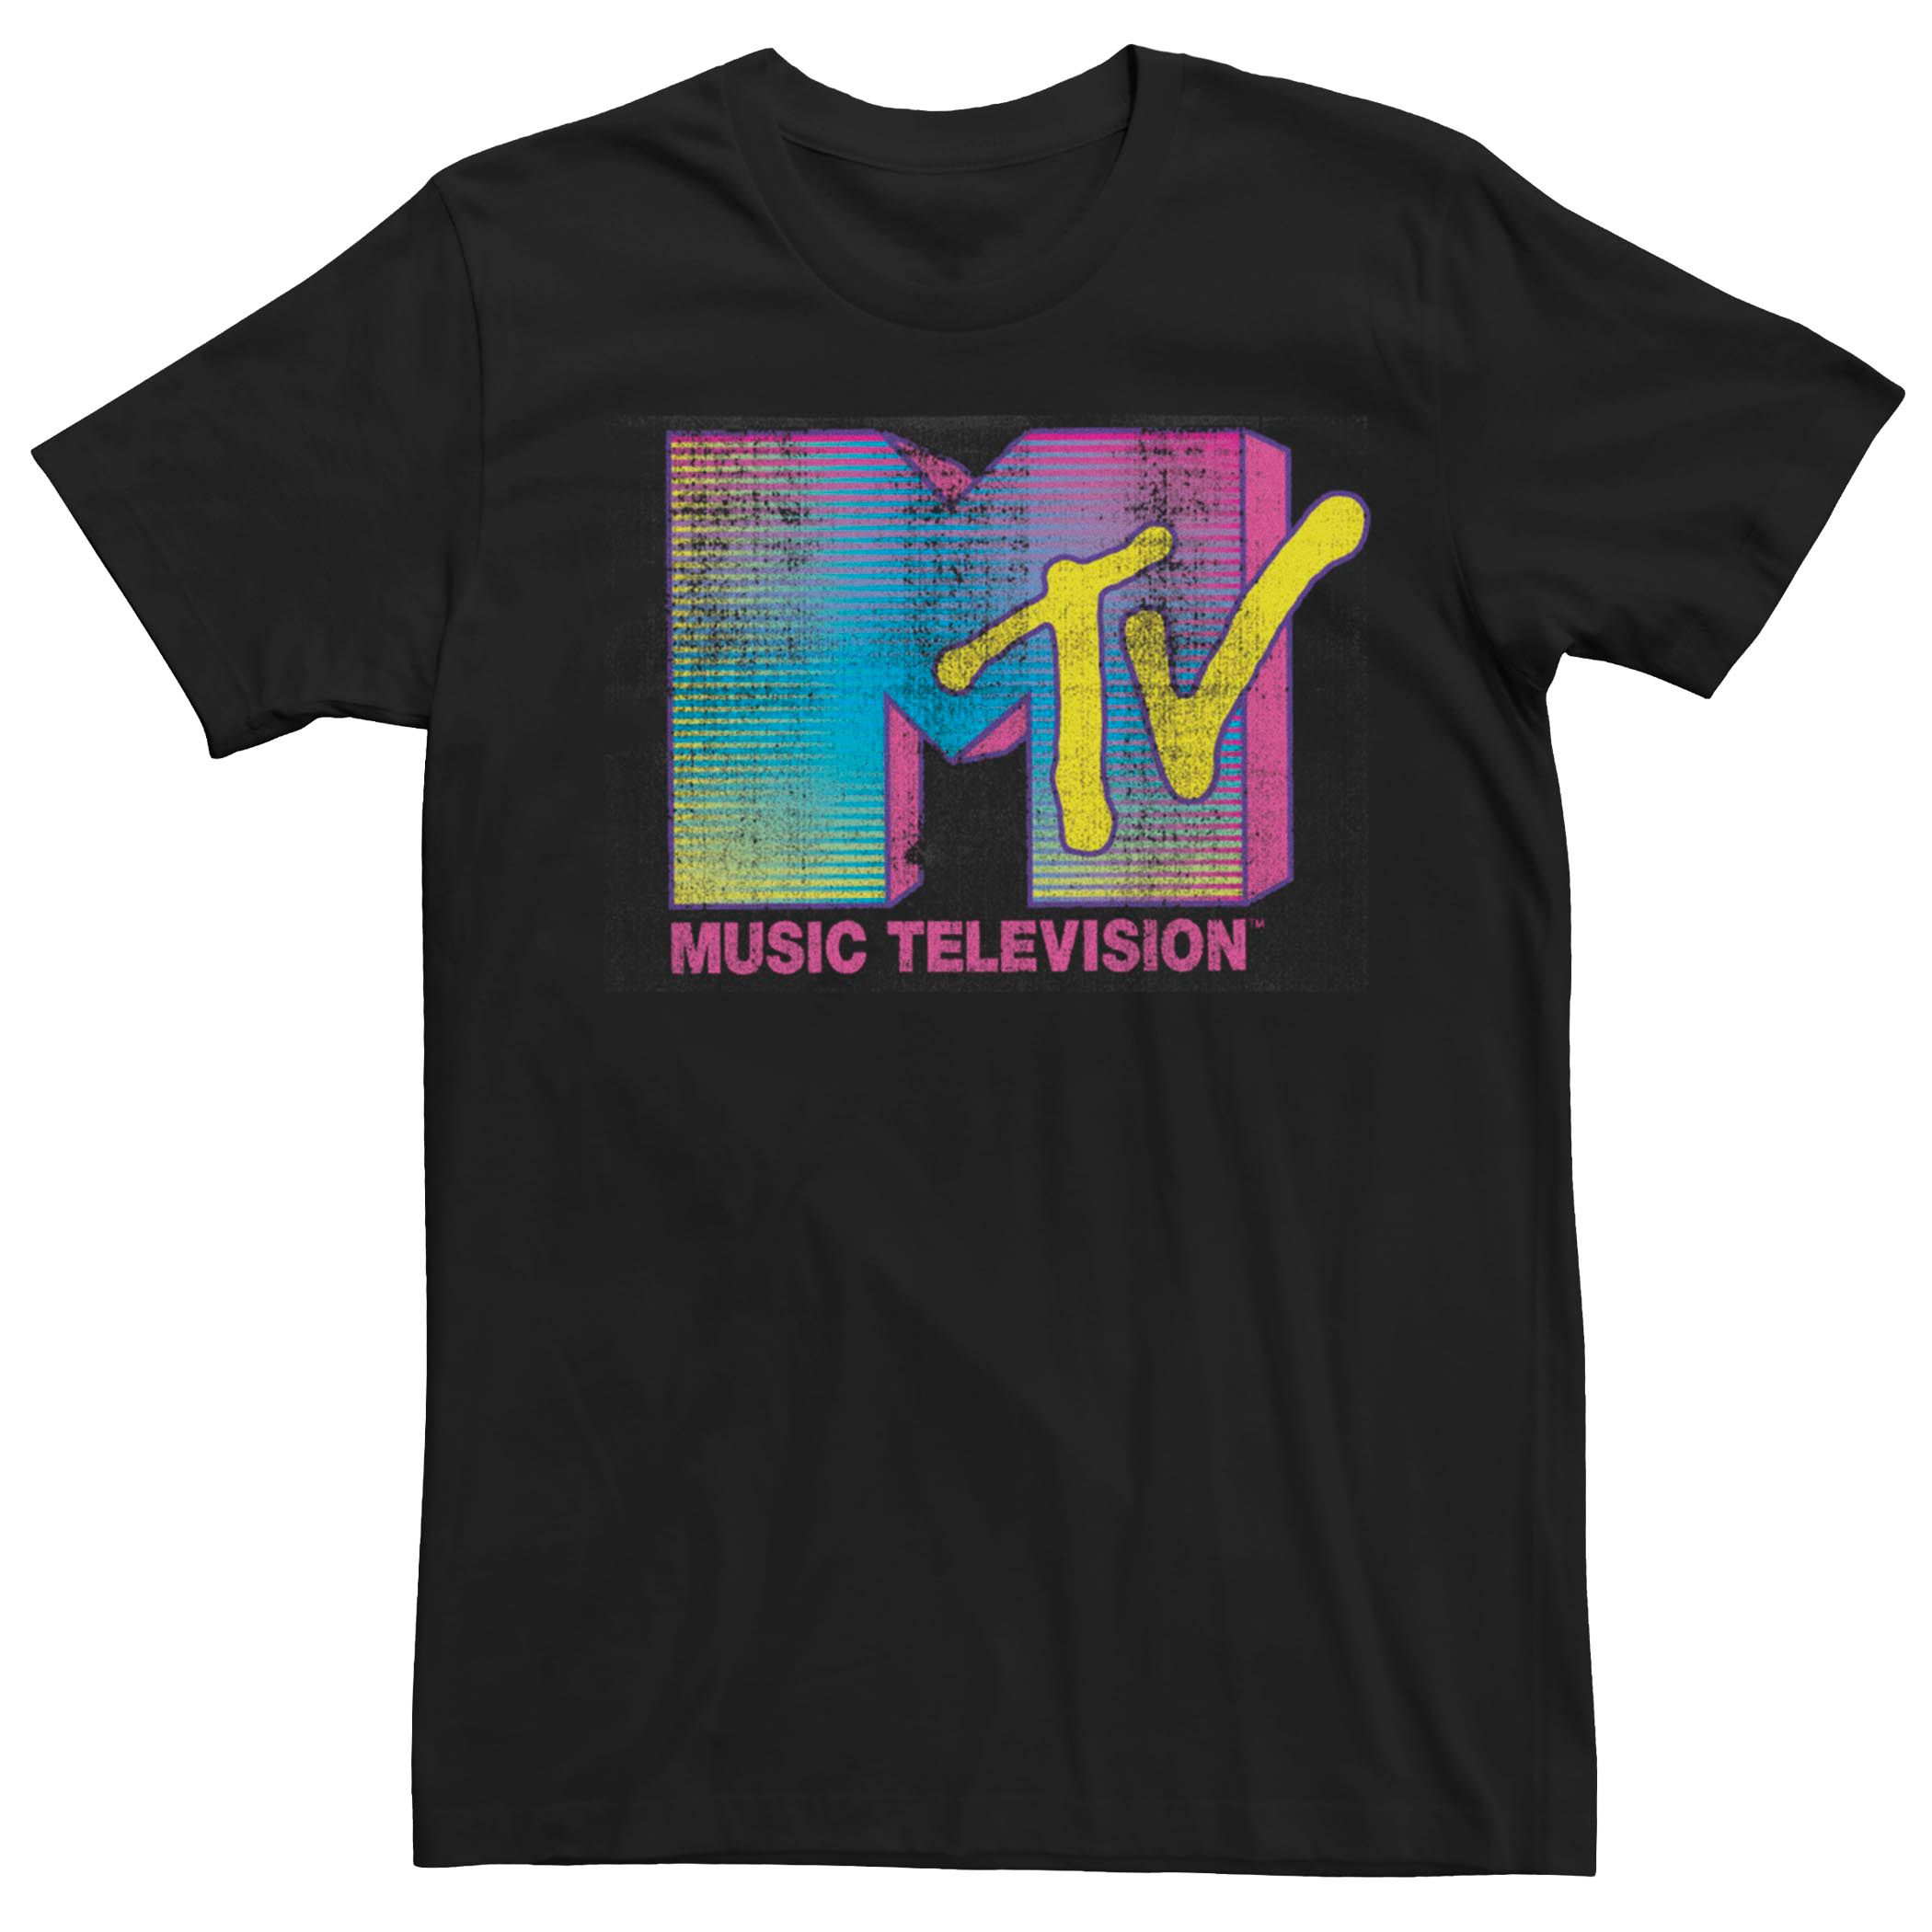 Мужская футболка с неоновым логотипом MTV Licensed Character, черный мужская футболка death before decaf с неоновым скелетом licensed character